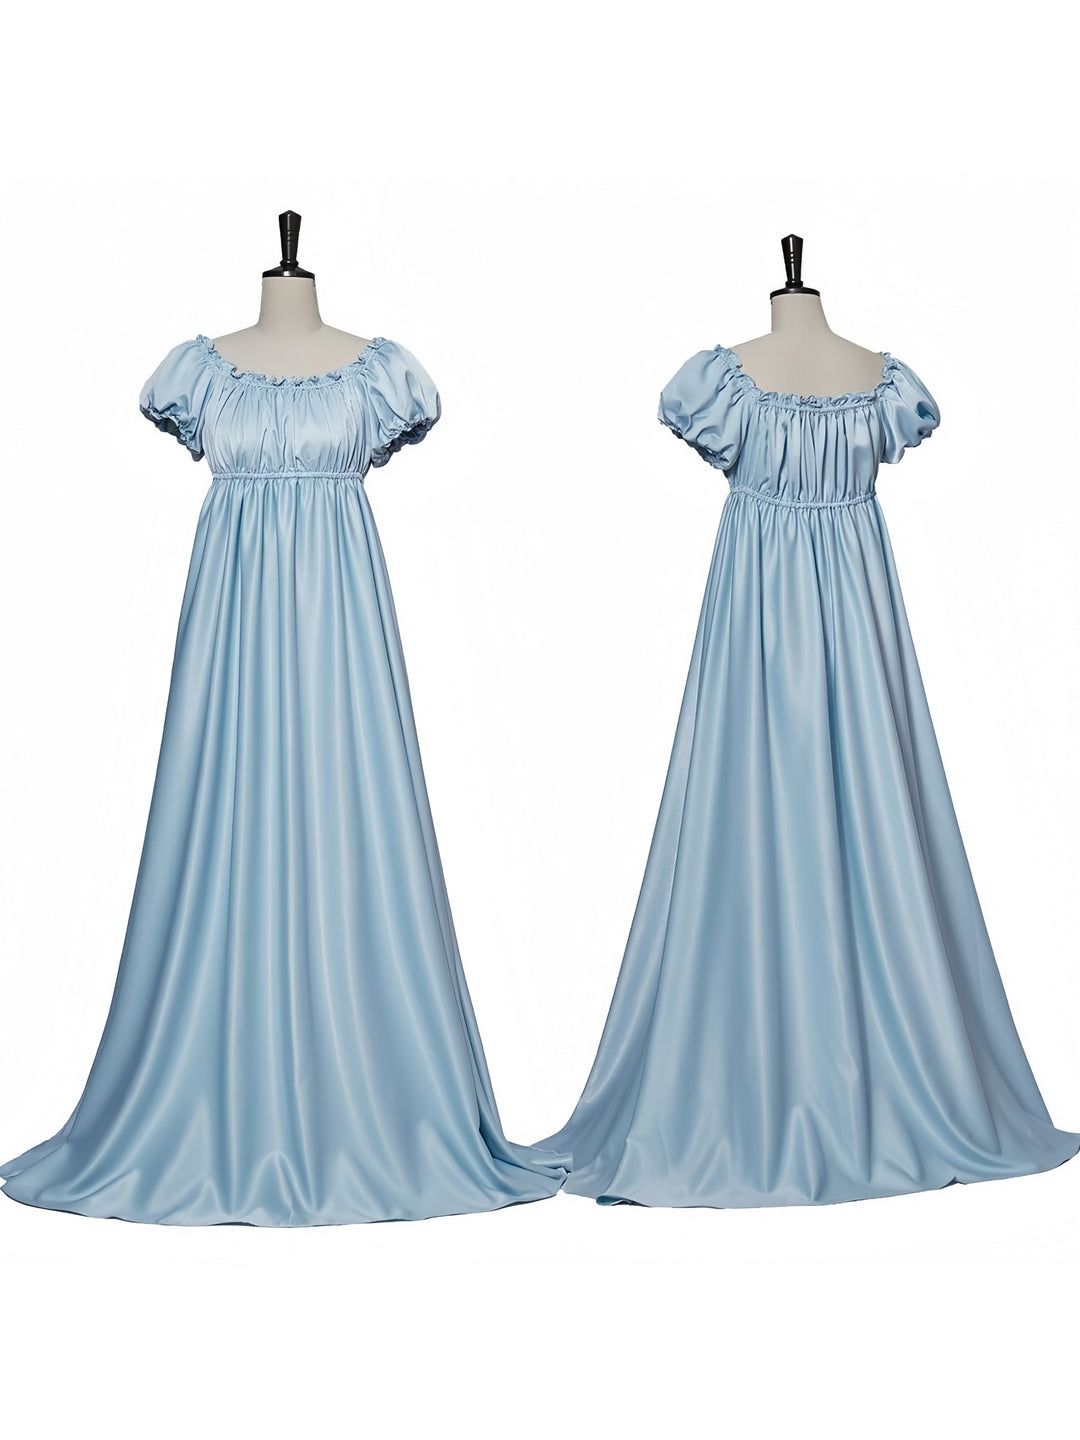 A-Line/Princess Jewel Neck Short Sleeves Floor-Length Vintage Dress with Ruffles